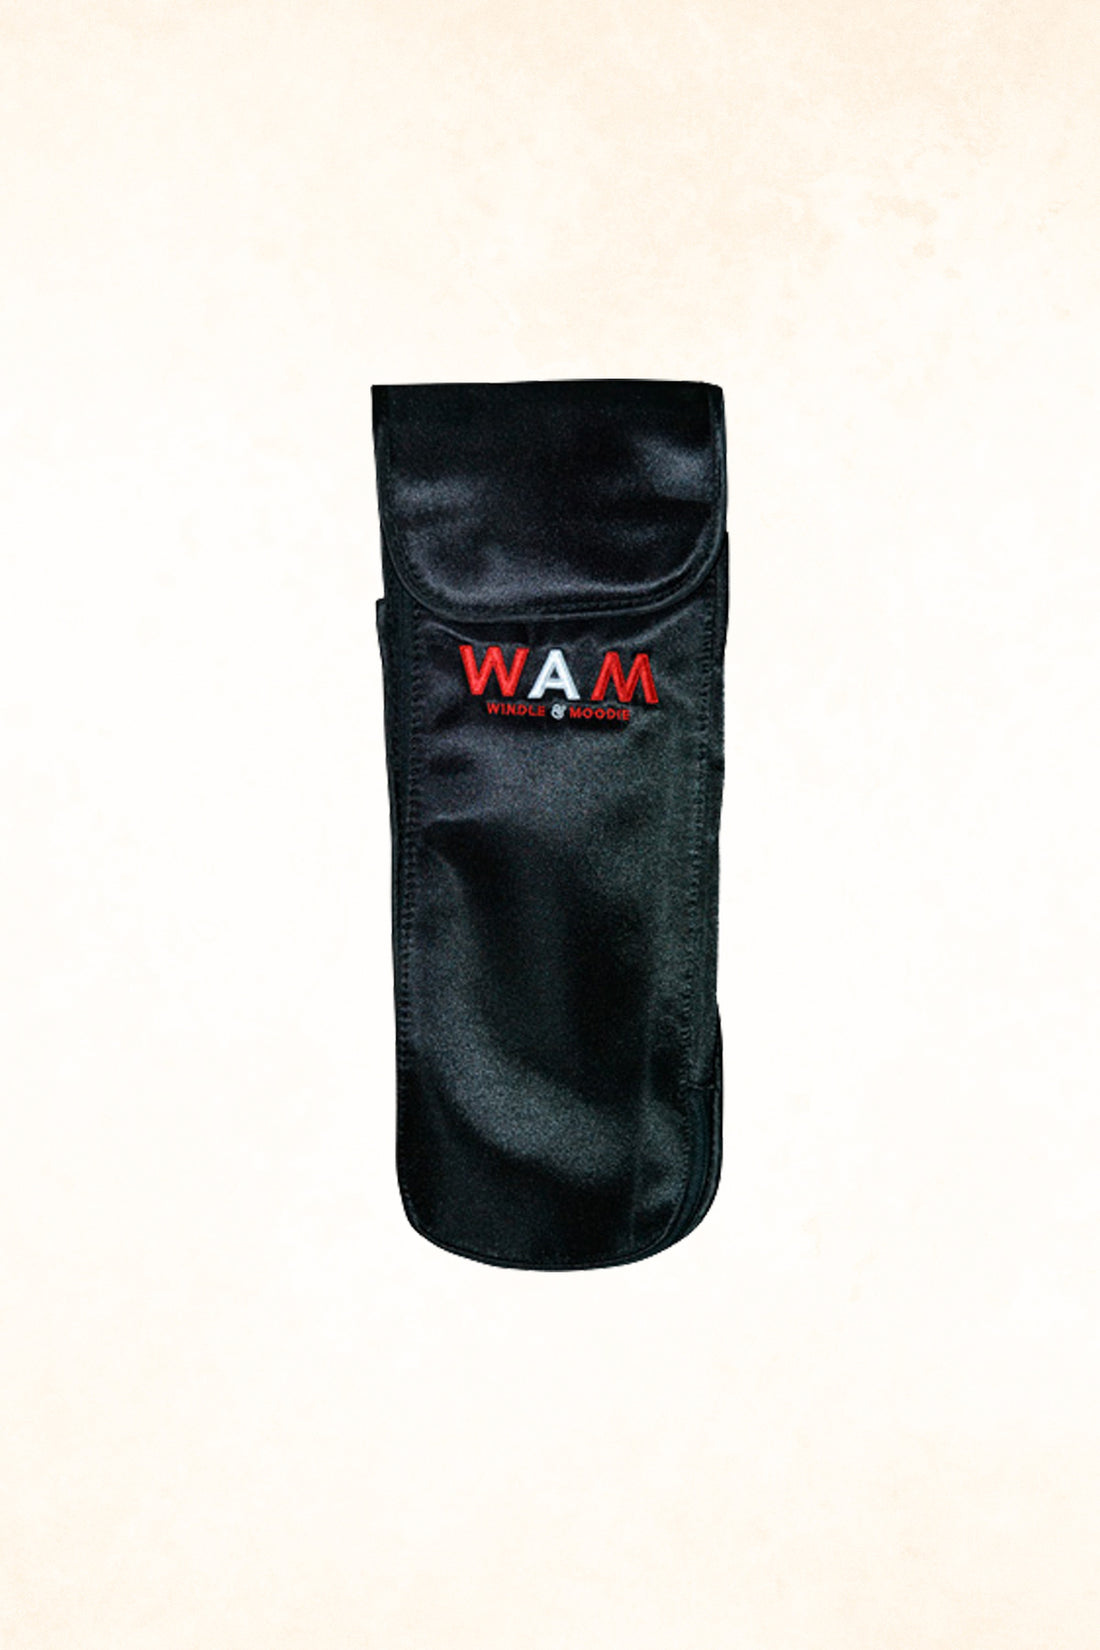 WAM (Windle &amp; Moodie) – Heat Resistant Mat